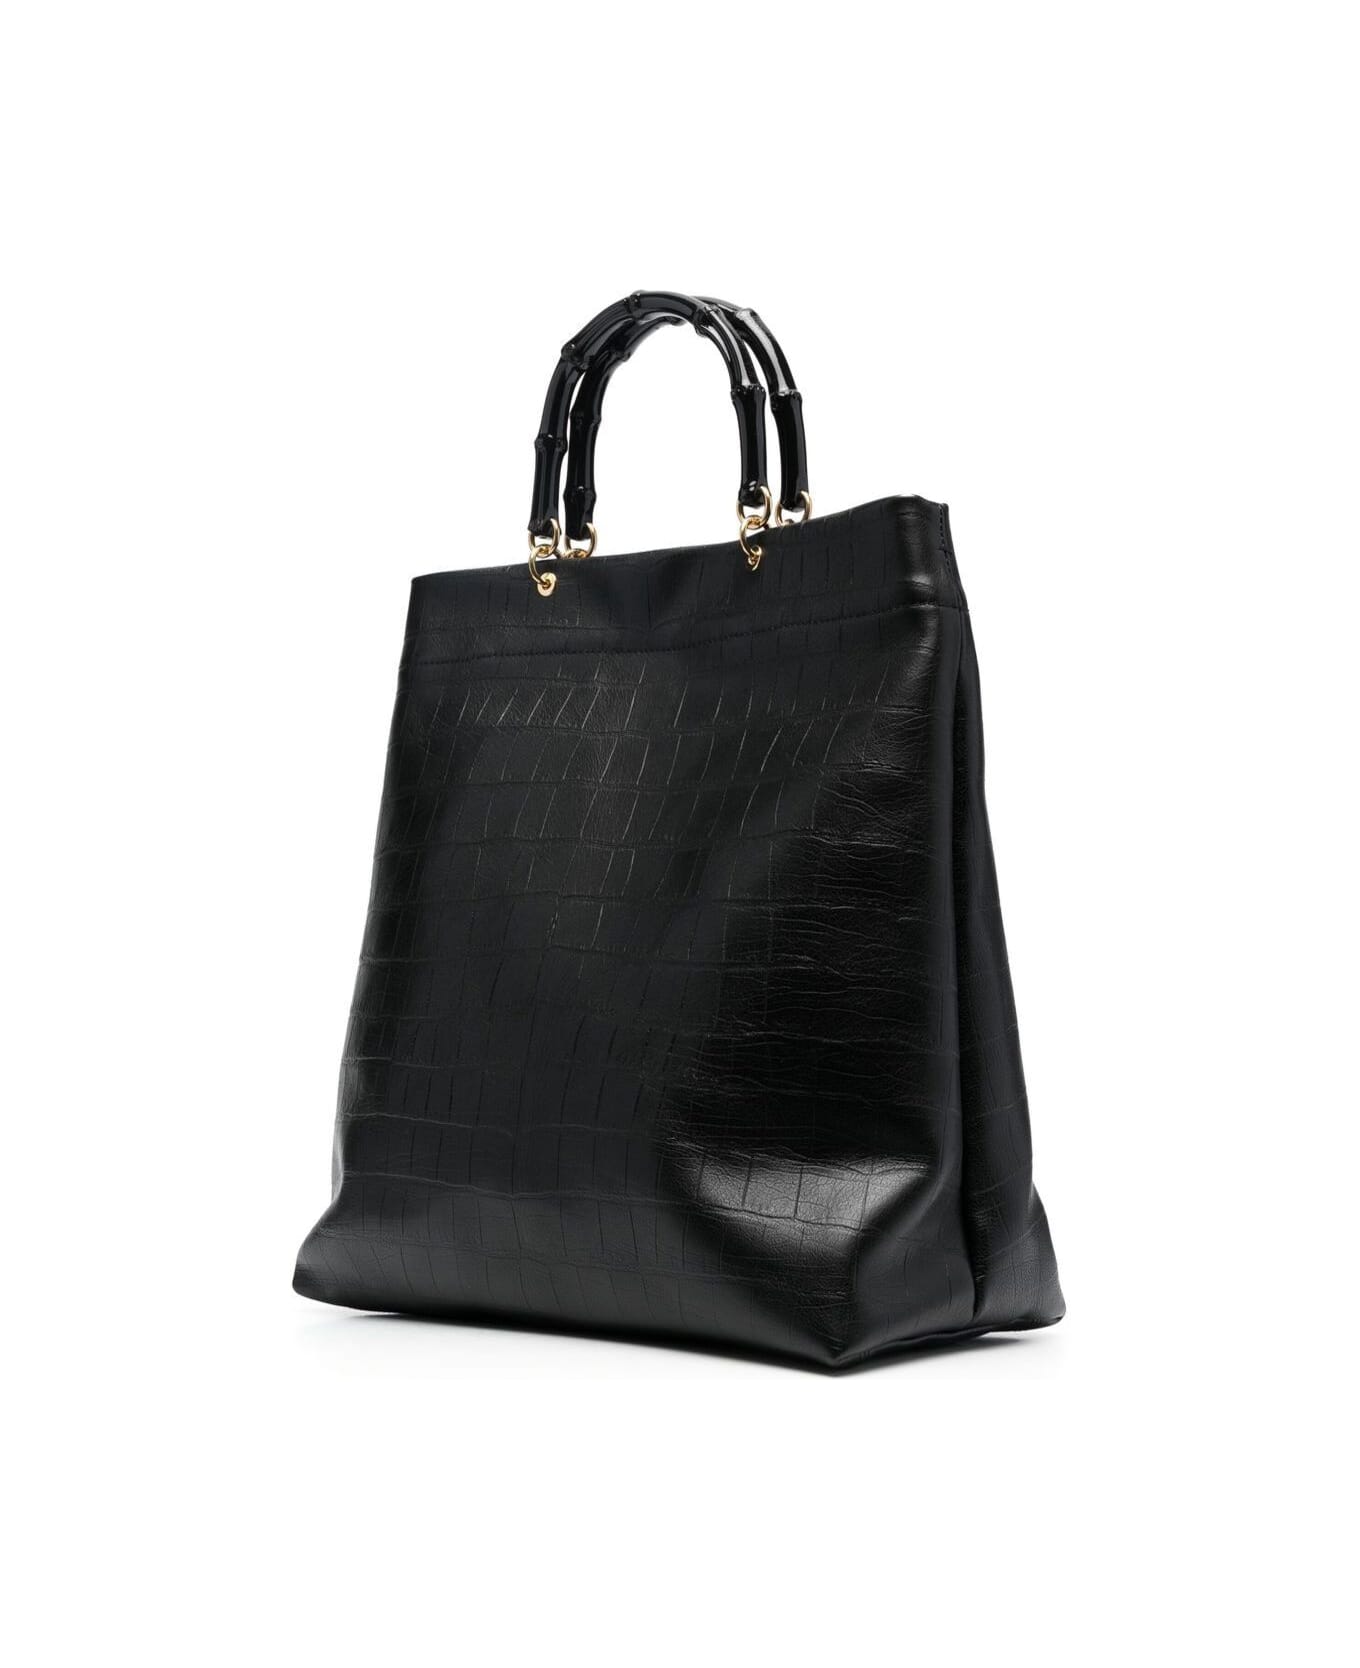 Jil Sander Black Croco Embossed Tote Bag With Bamboo Handles In Leather Woman - Black